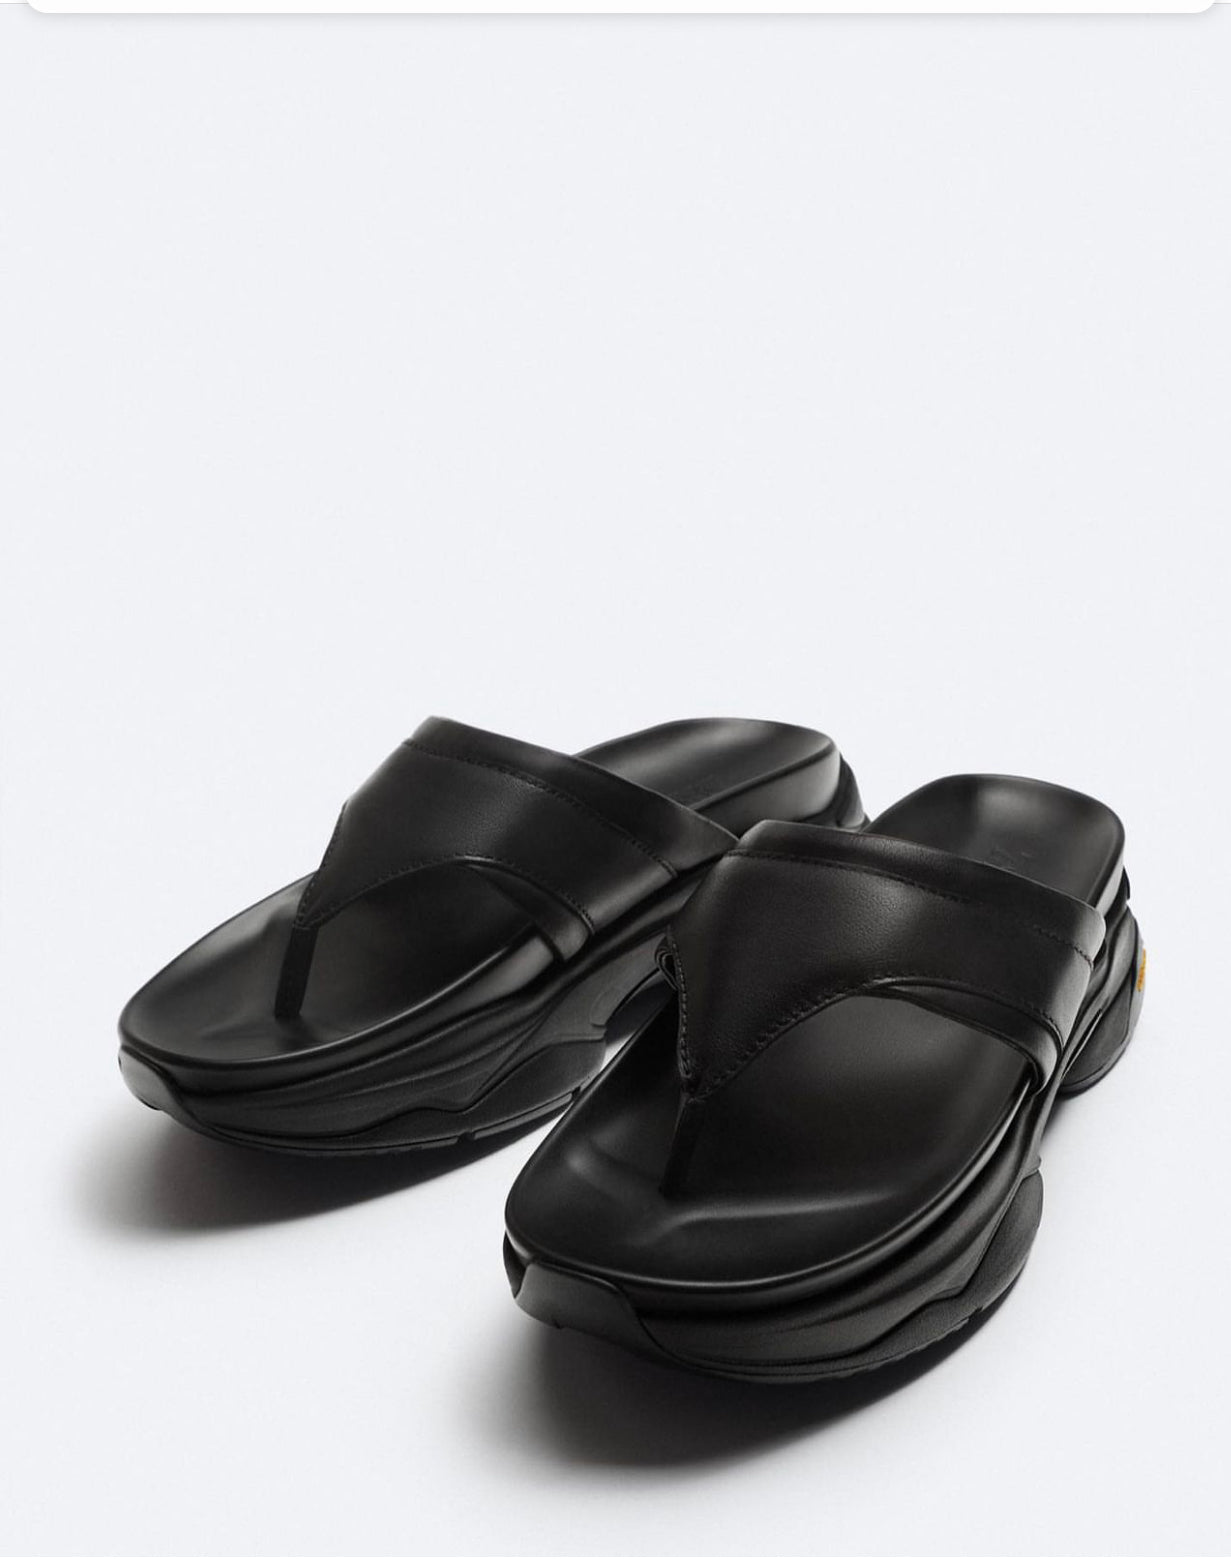 Zara vibram leather sandals